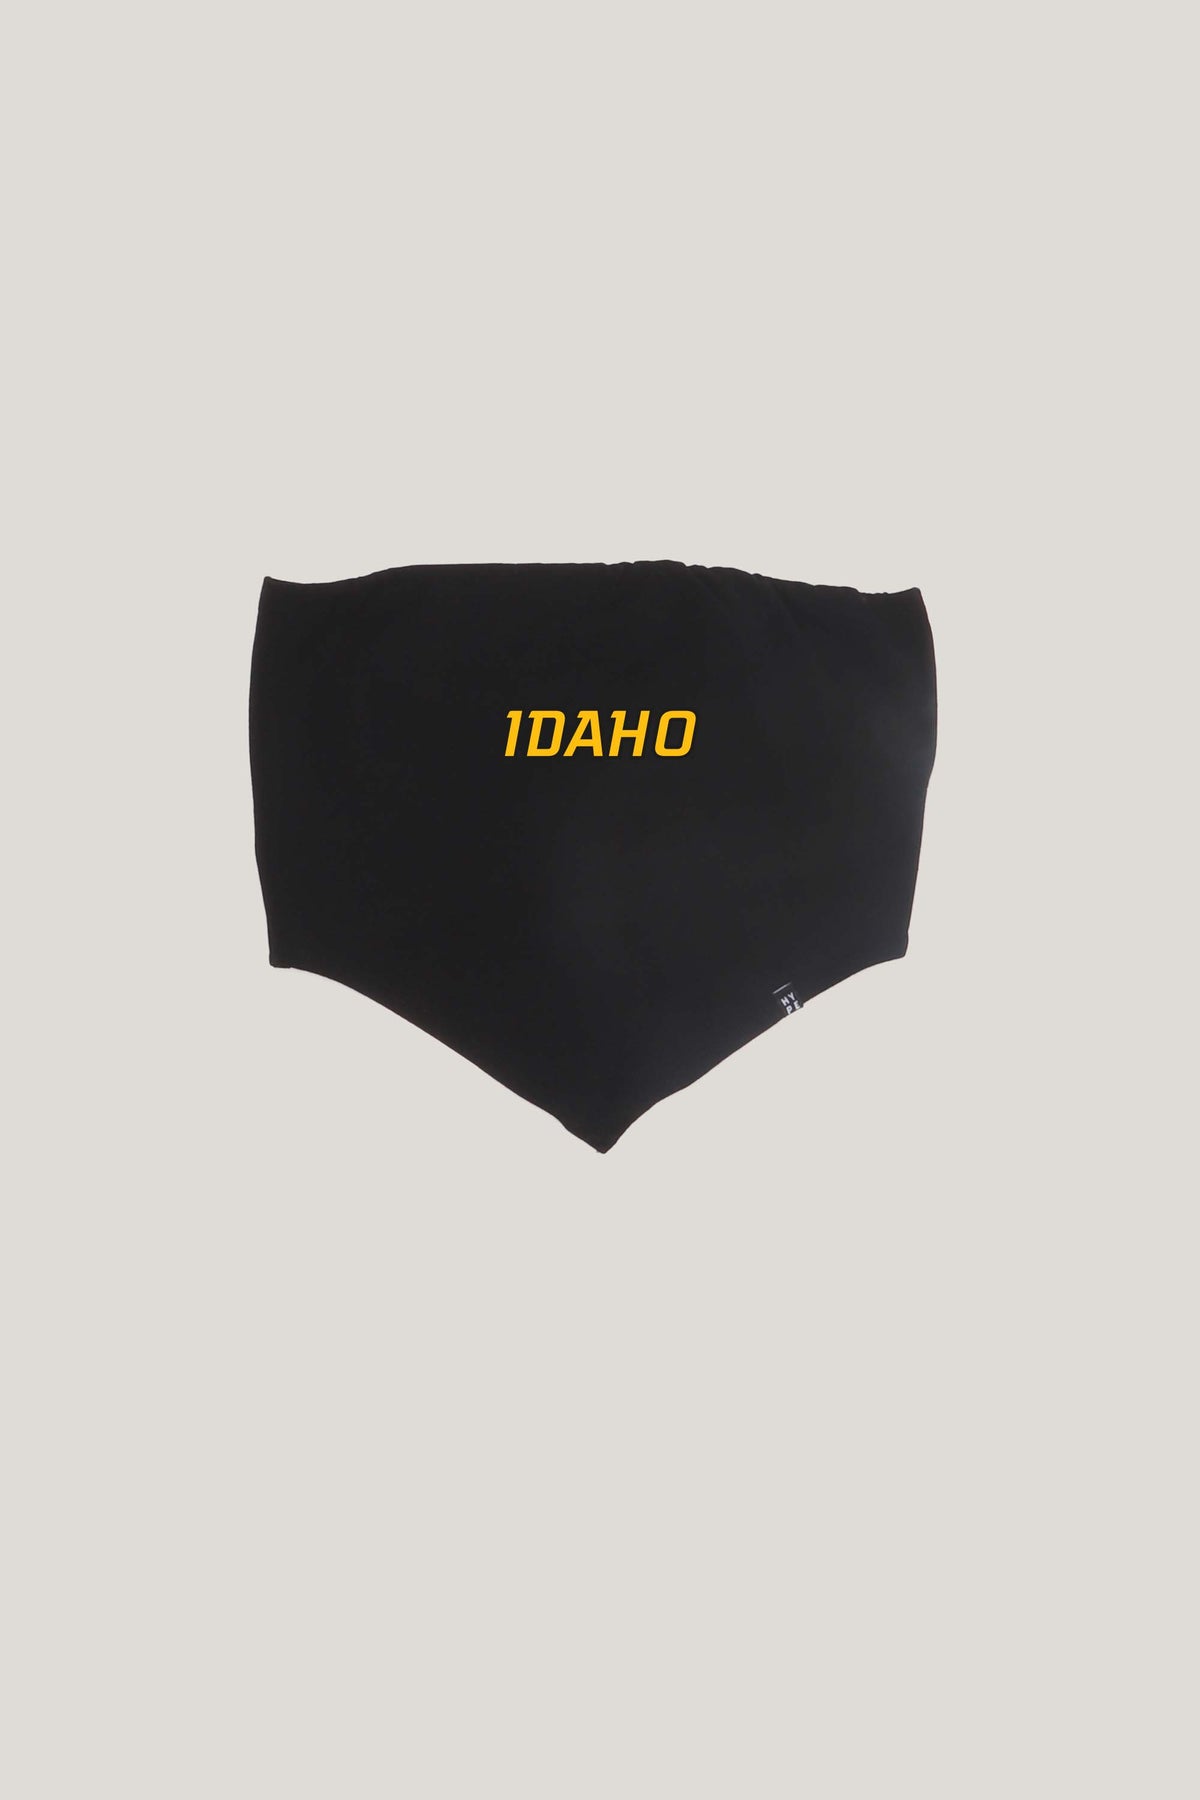 Idaho Bandana Top